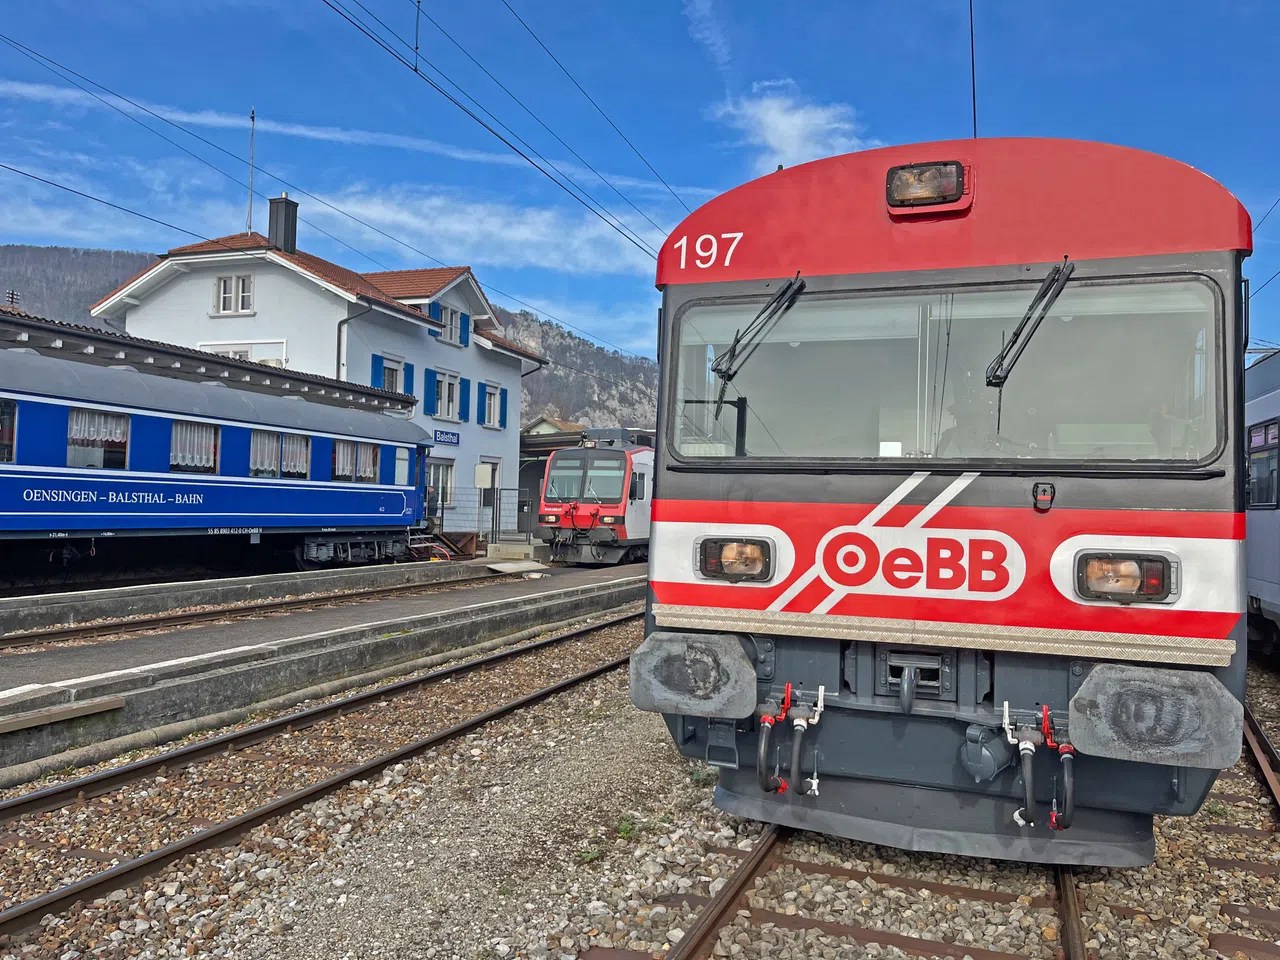 Switzerland’s shortest private railway turns 125 years old